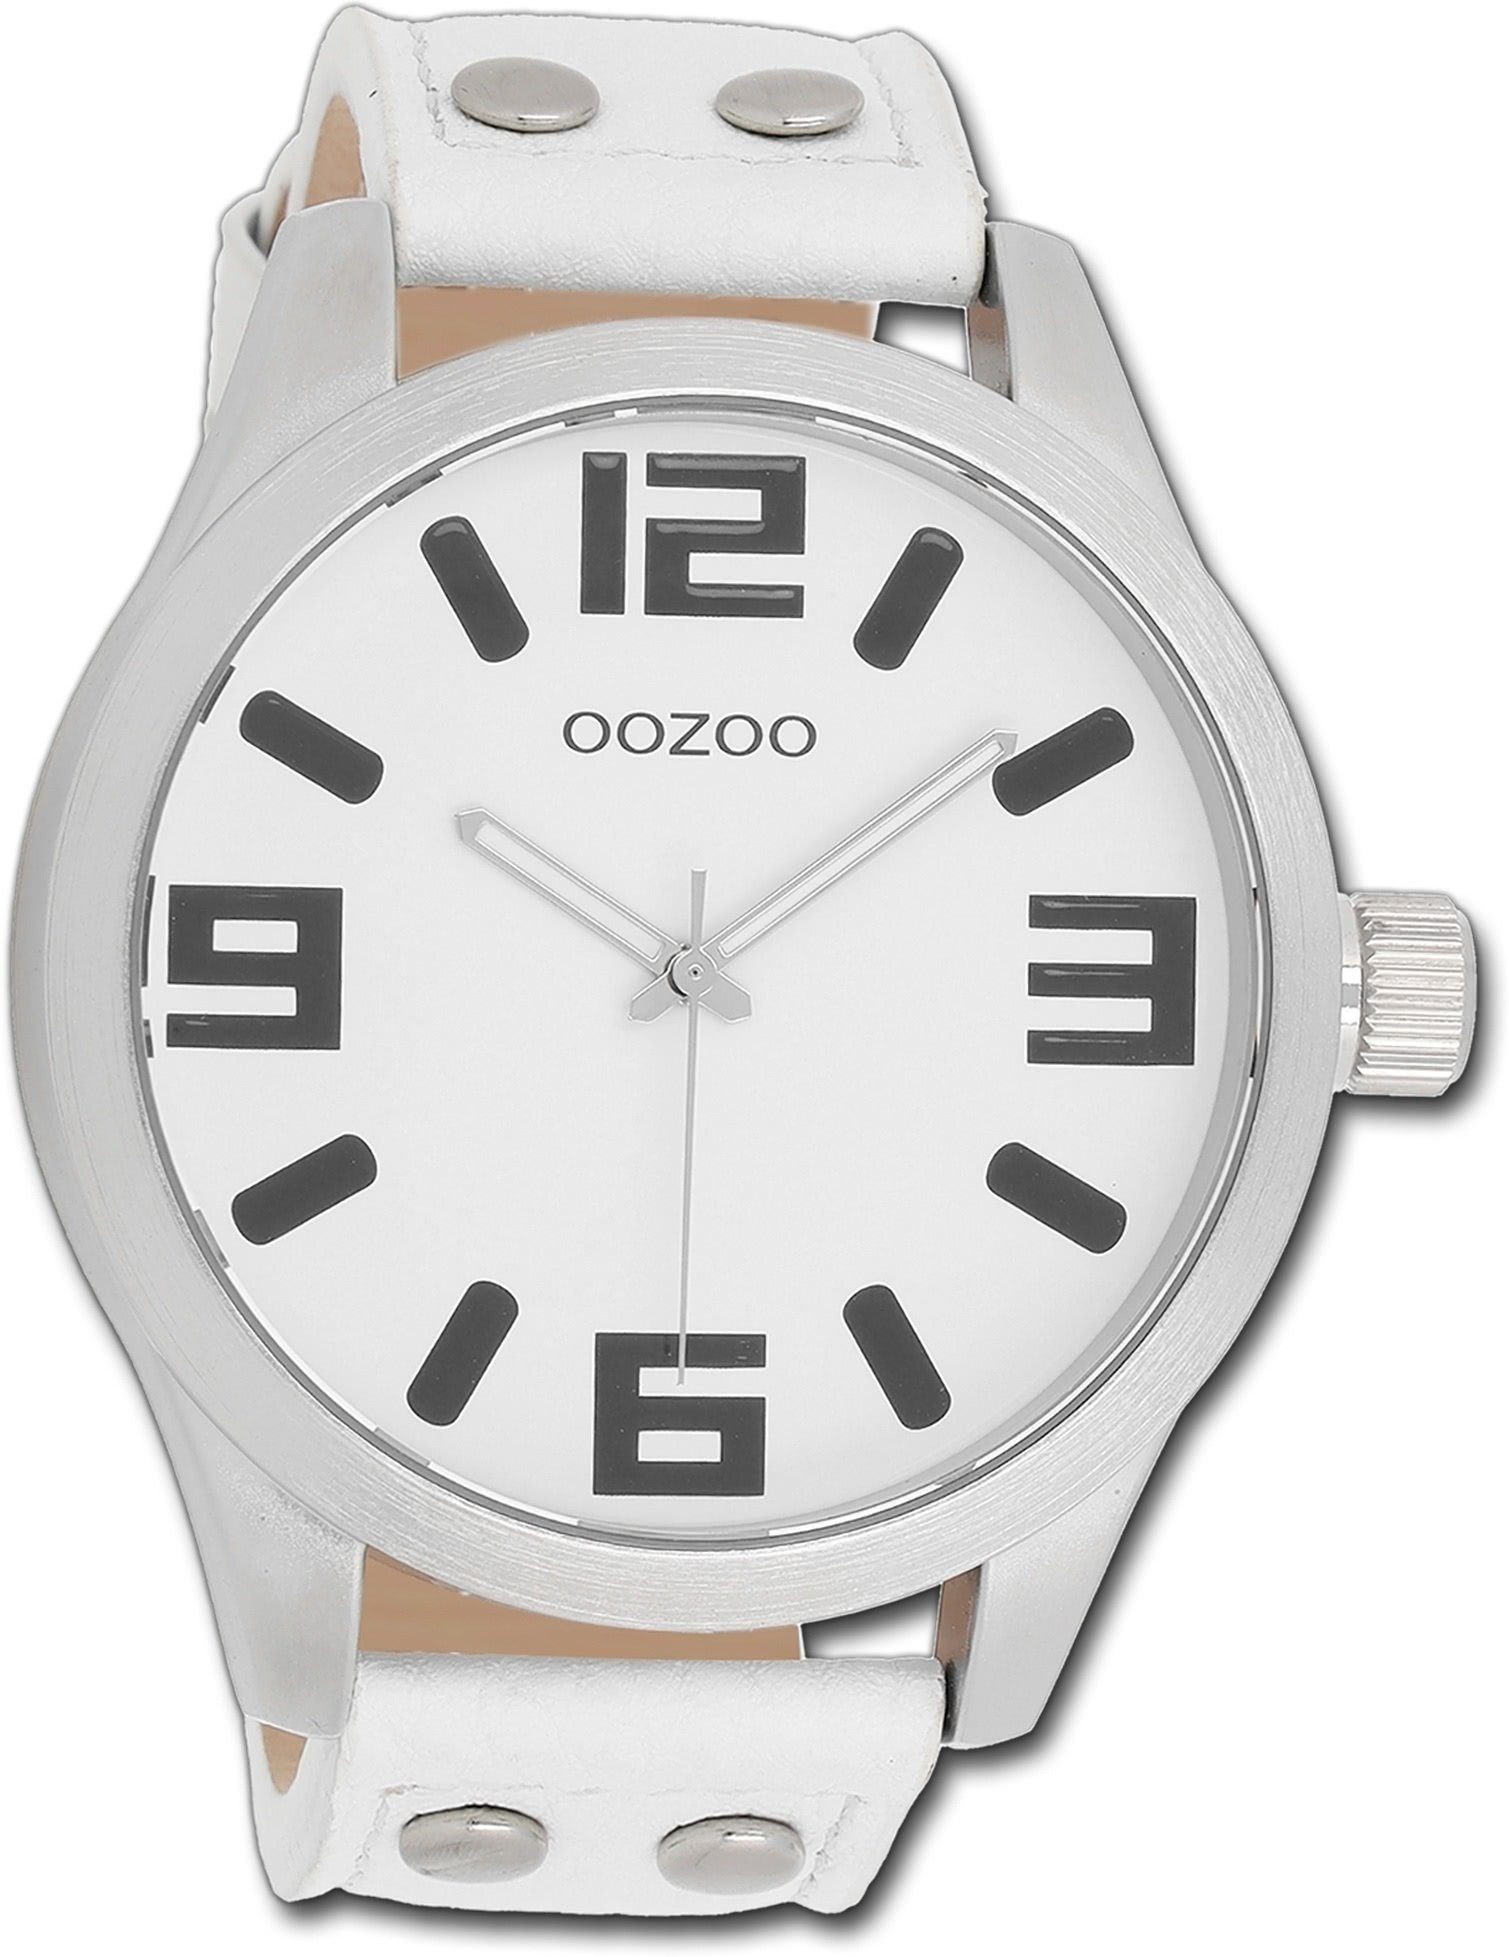 OOZOO Quarzuhr Oozoo Unisex Armbanduhr Timepieces, (Analoguhr), Damen-Herrenuhr Lederarmband weiß, rundes Gehäuse, groß (ca. 51mm)